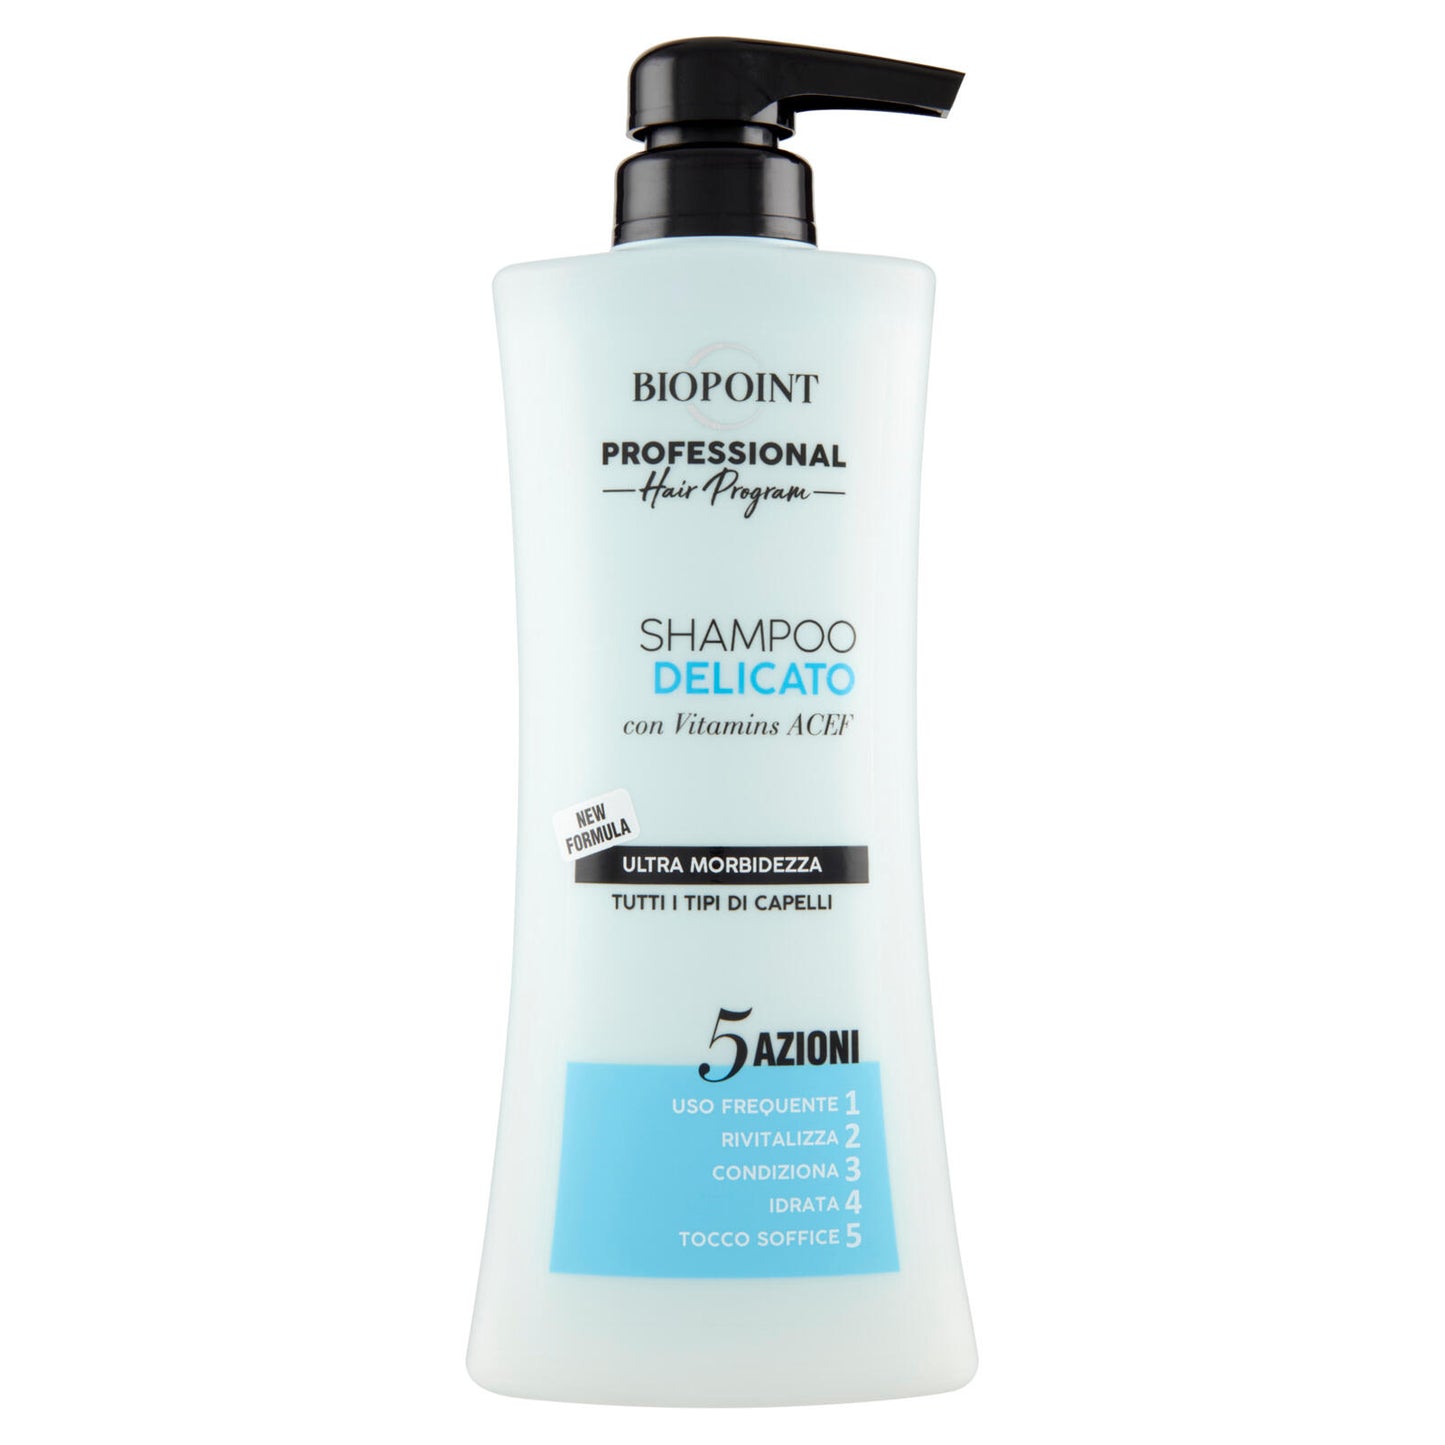 Biopoint Professional Hair Program Shampoo Delicato 400 ml